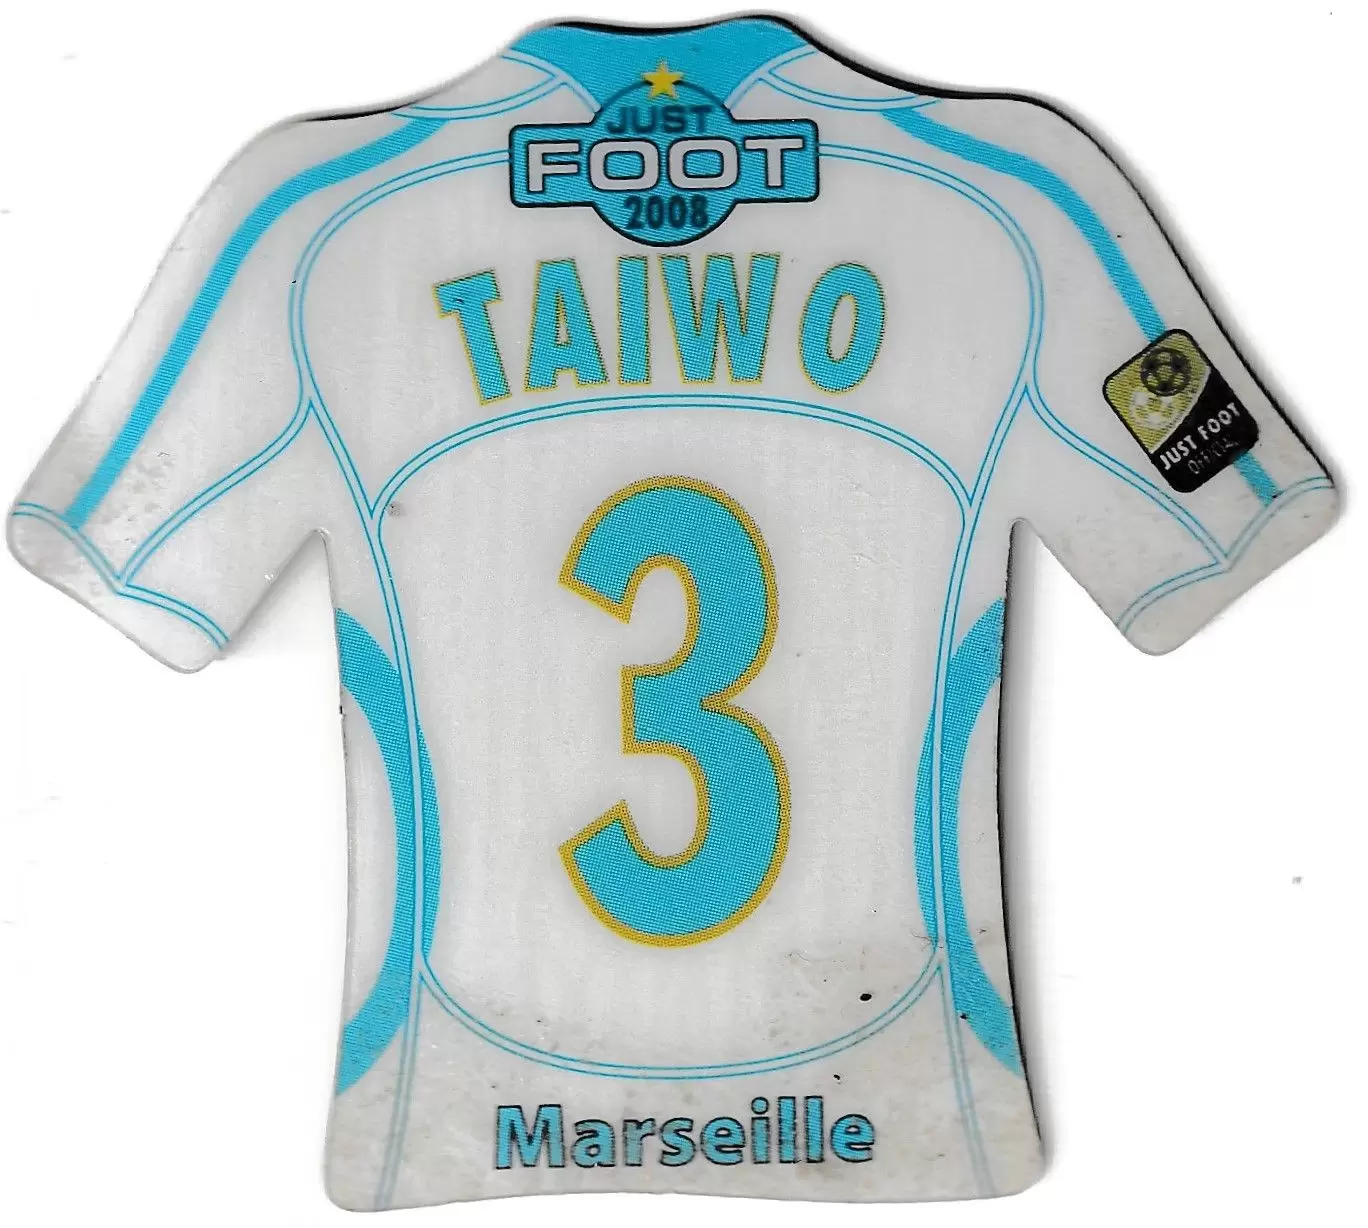 Just Foot 2008 - Marseille 3 - Taiwo